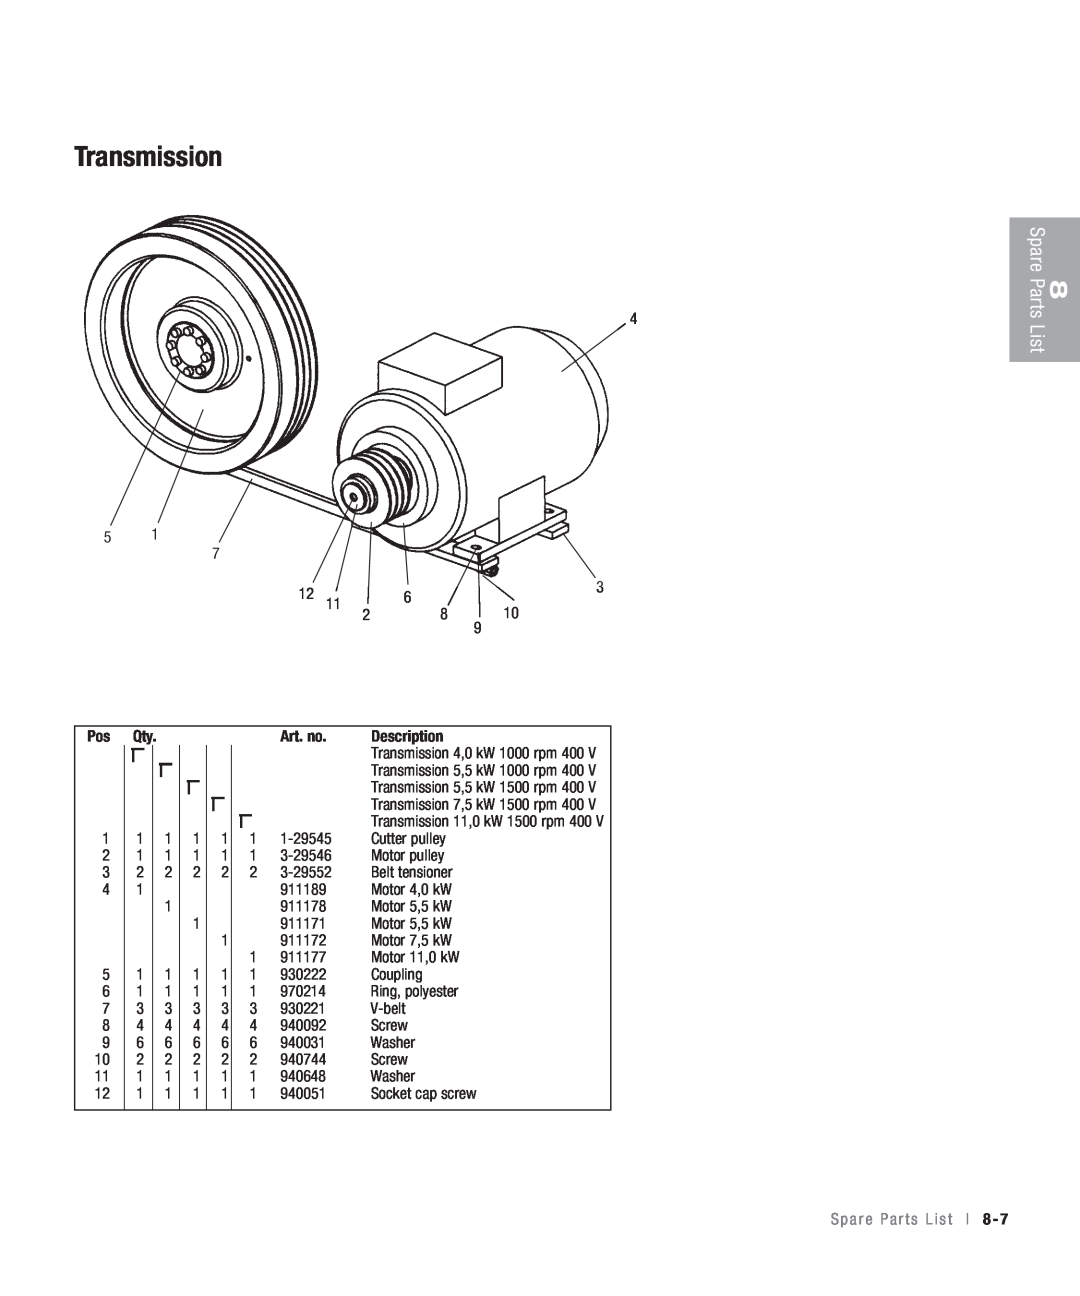 Conair CHS-810 manual Transmission, Art. no, Description, Spare Parts, List, S p a r e P a r t s L i s t l 8 